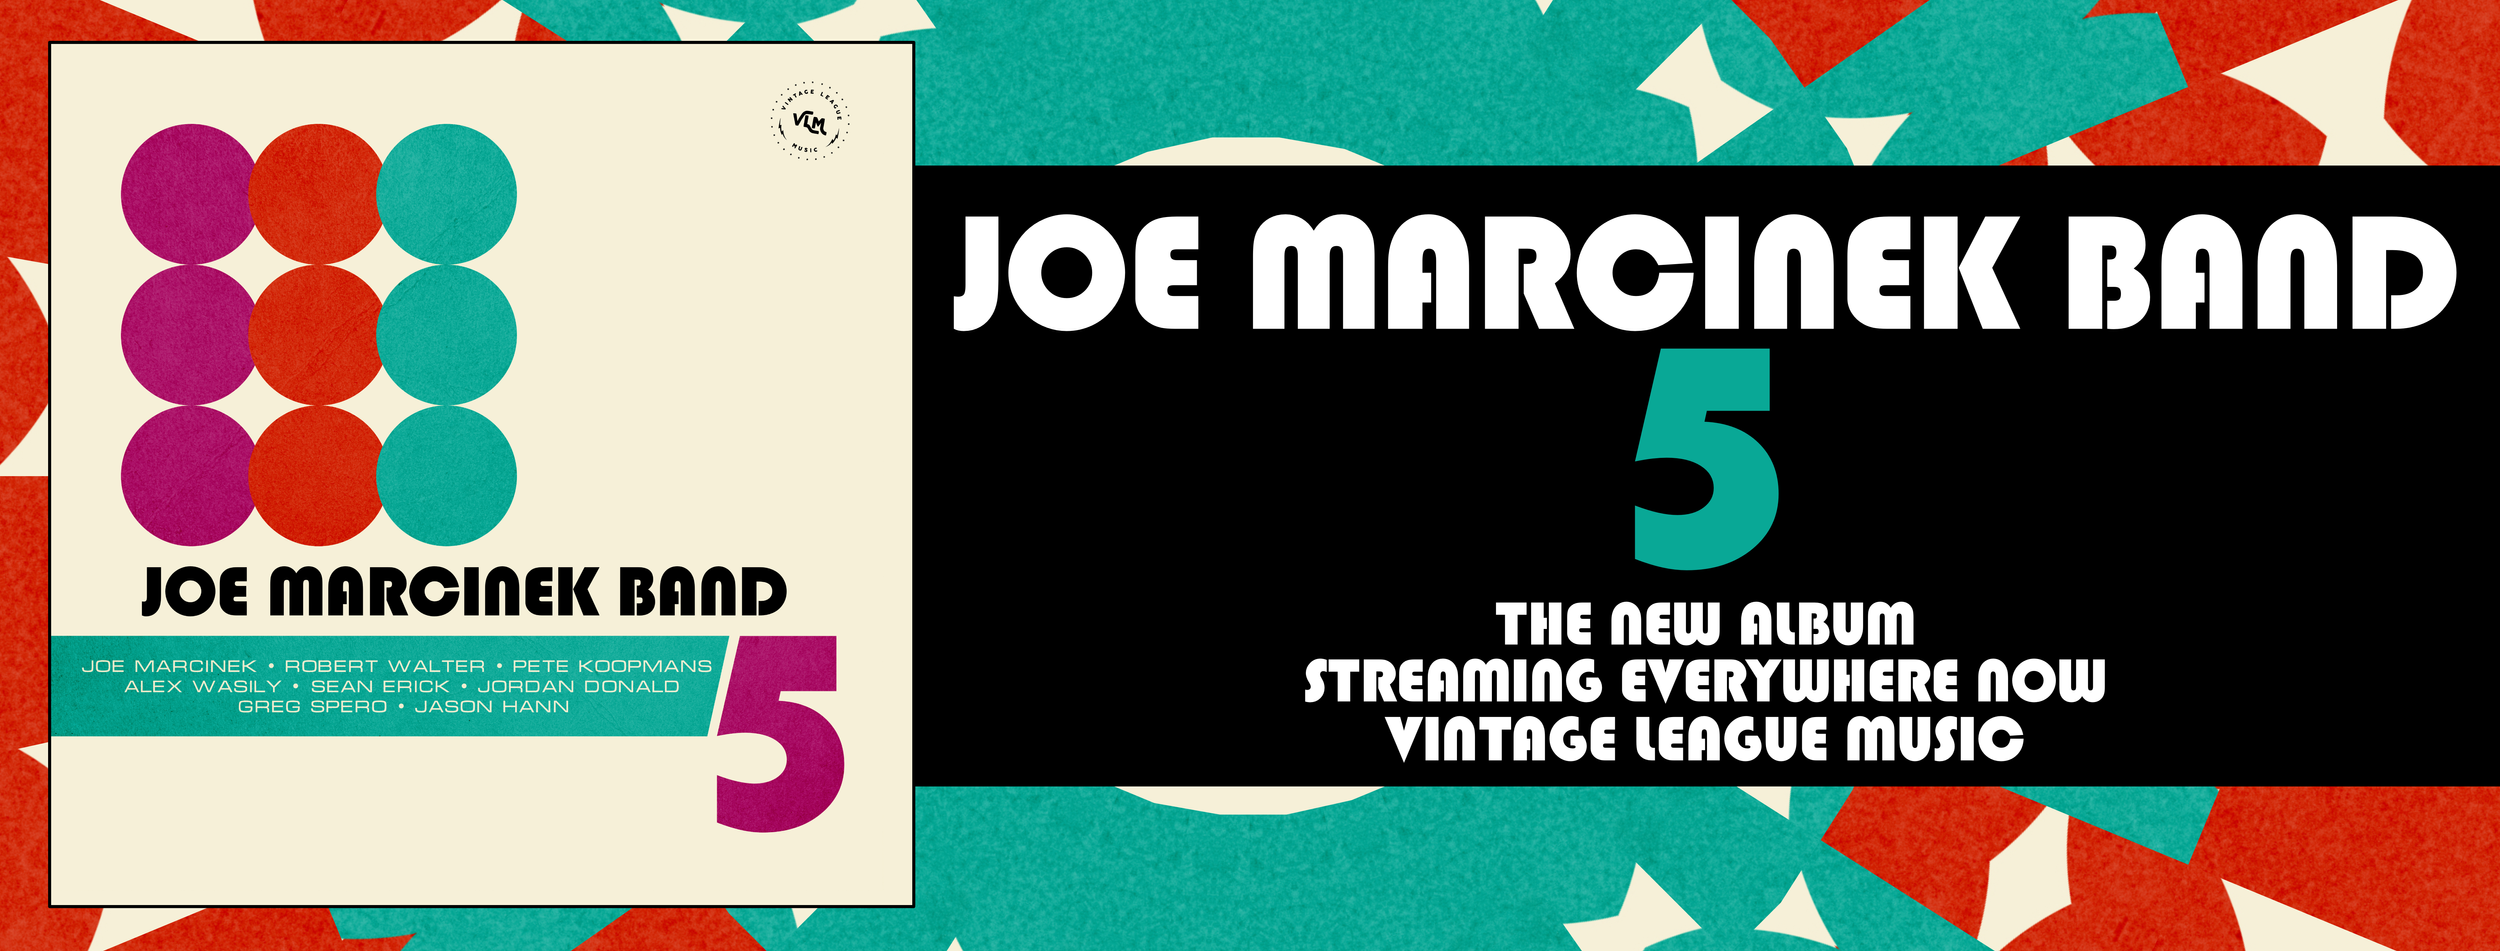 Joe Marcinek Band - 5 banner@3x.png